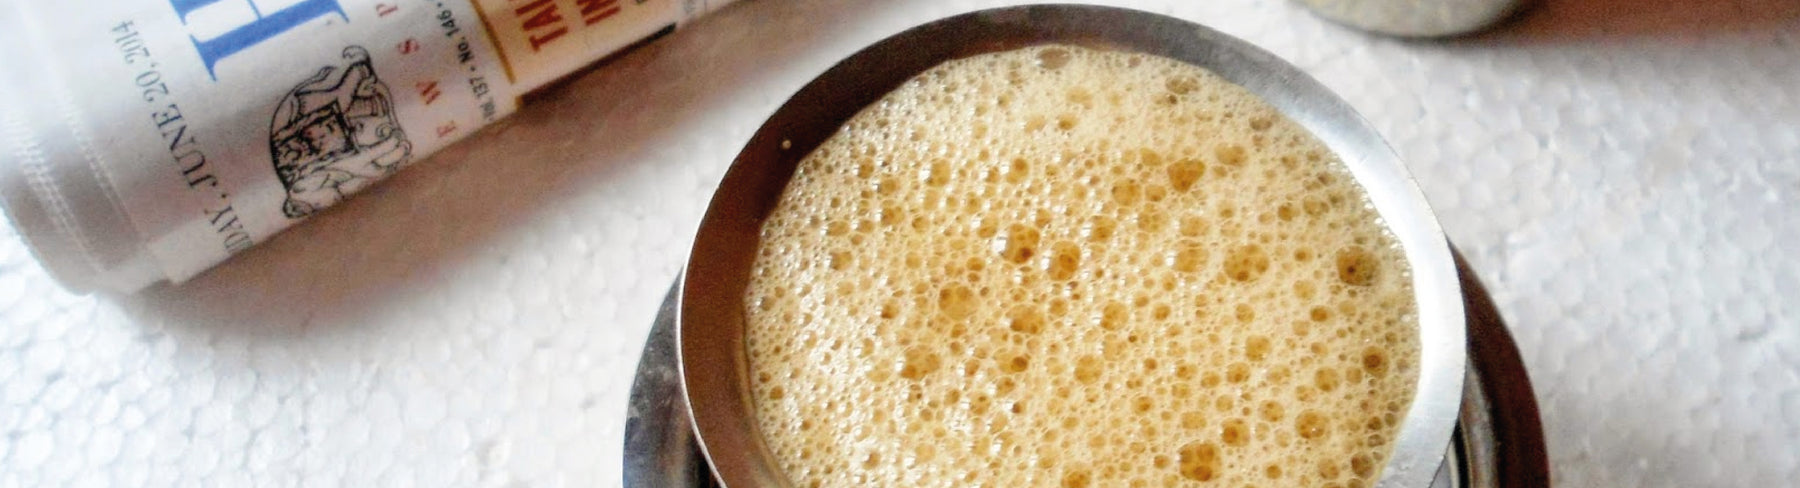 Easy South Indian vegan filter coffee recipe